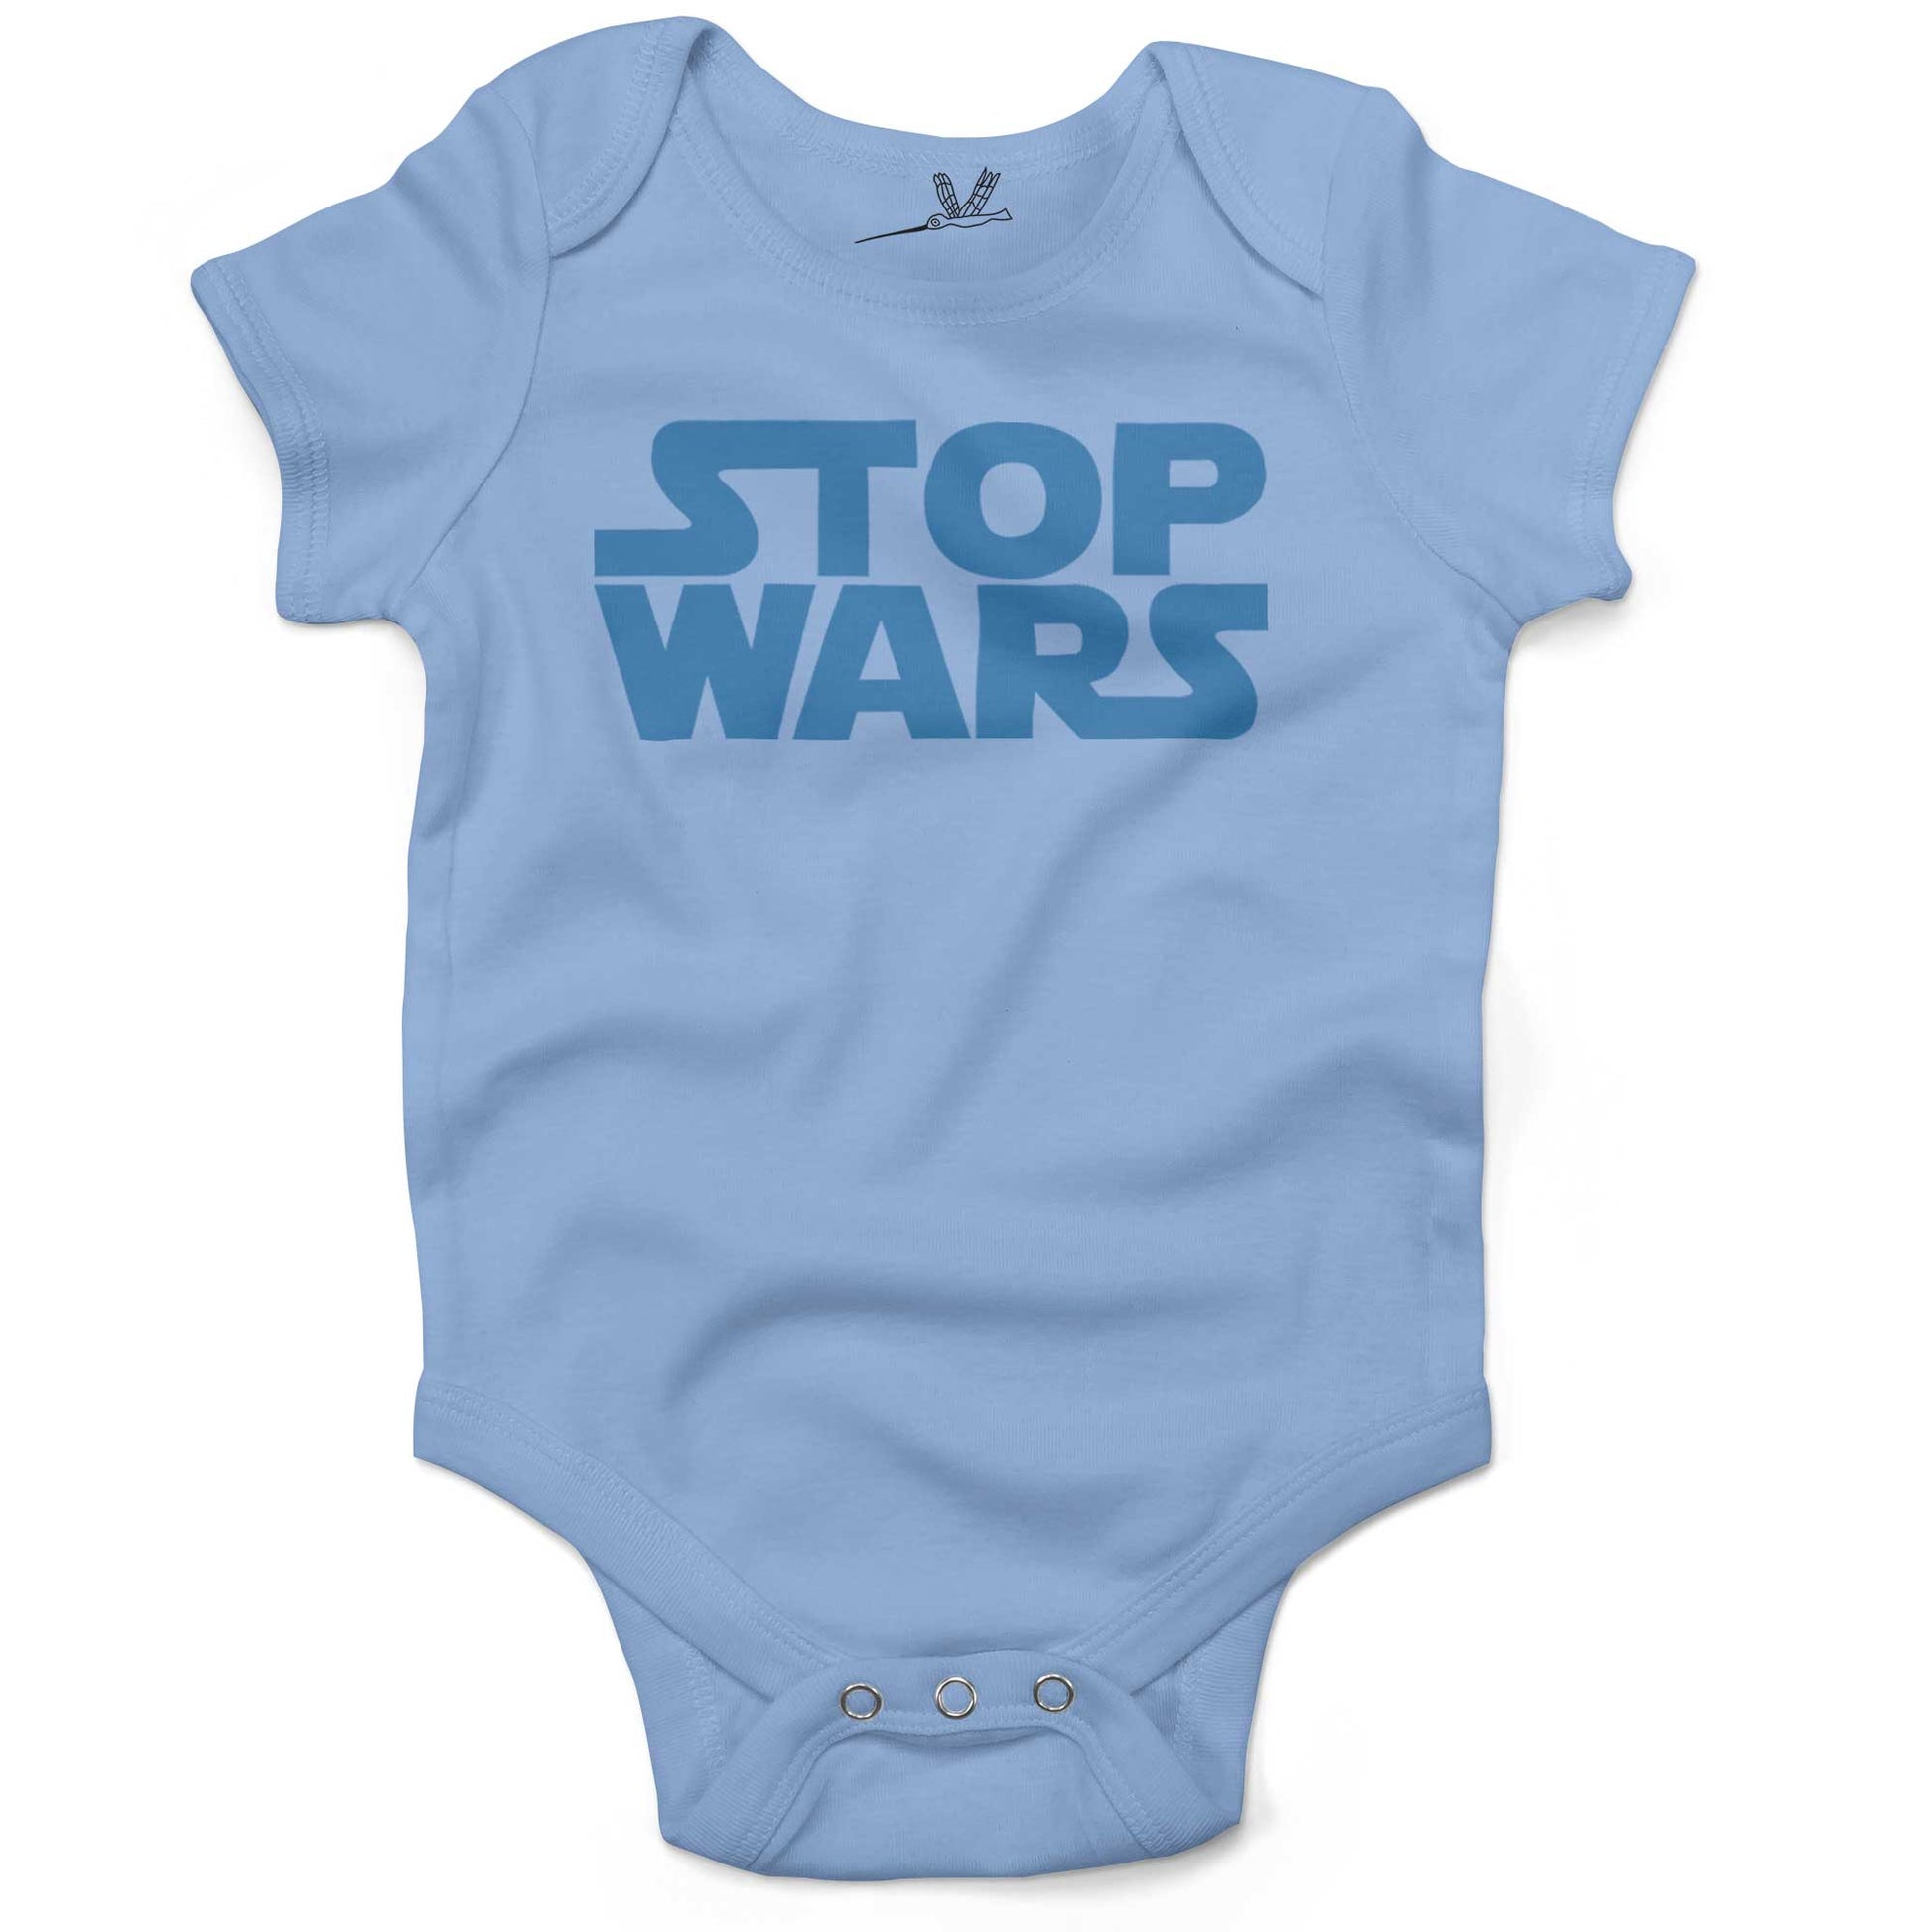 STOP WARS Infant Bodysuit or Raglan Baby Tee-Organic Baby Blue-3-6 months